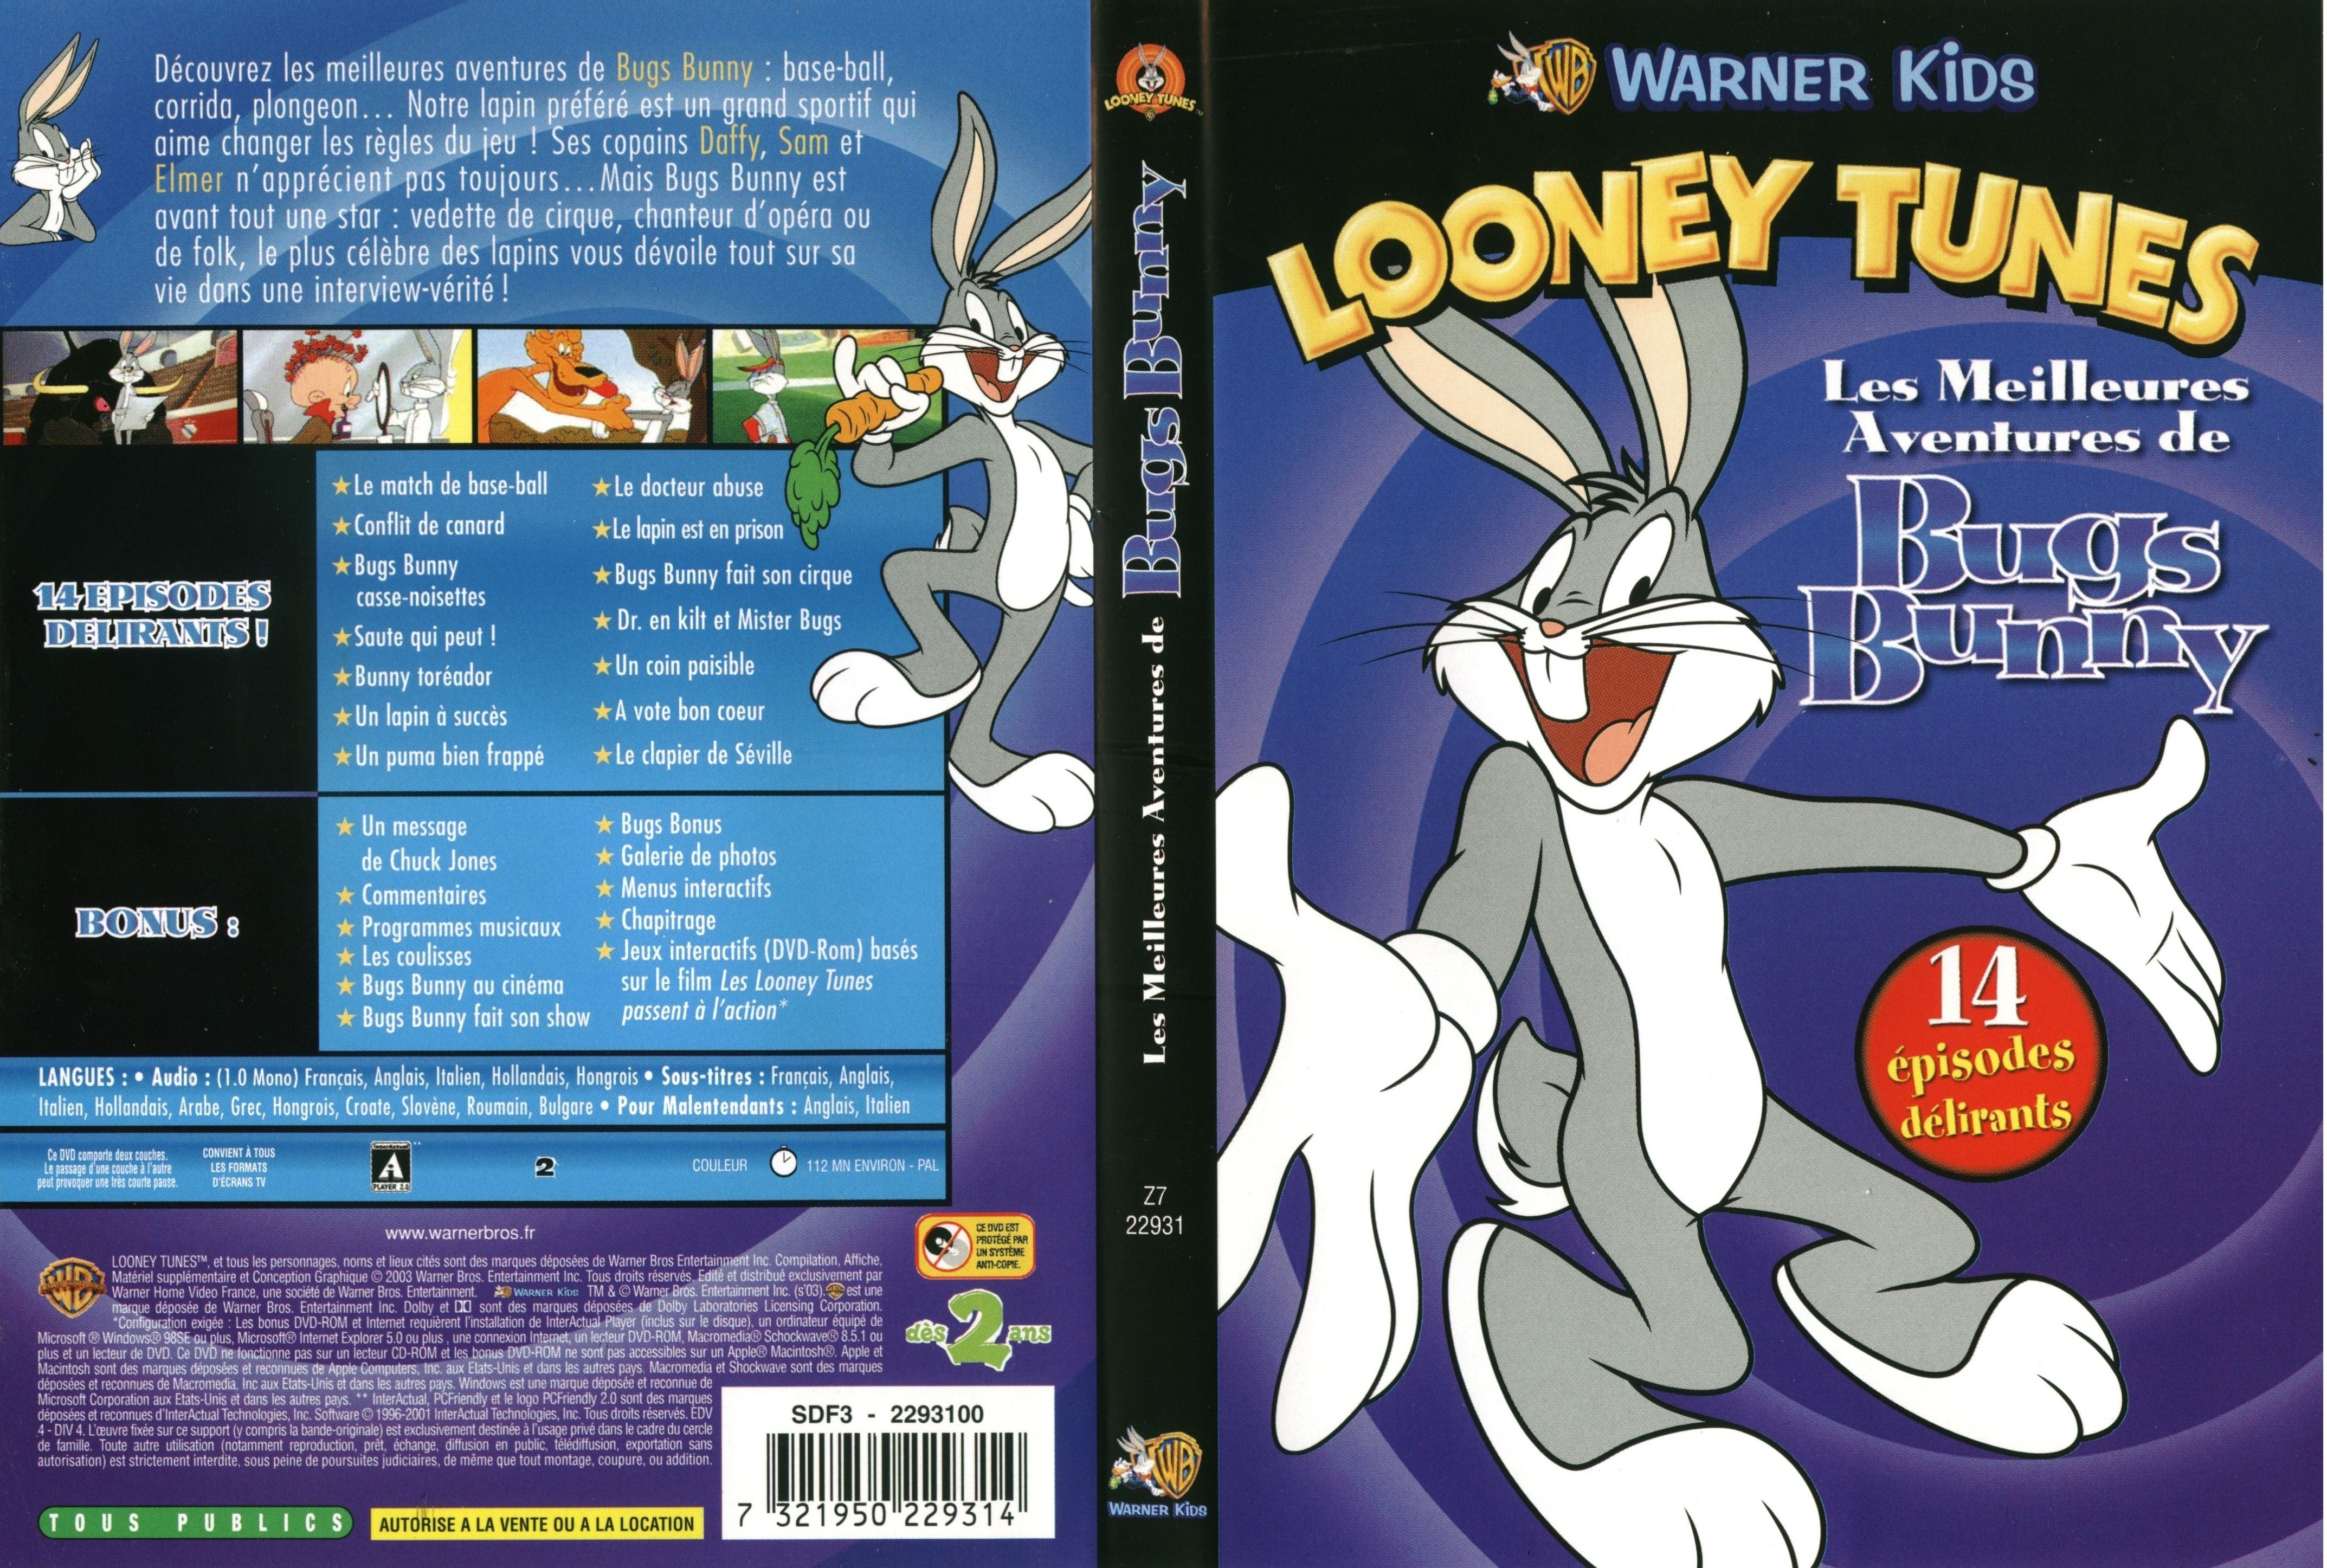 Jaquette DVD Looney tunes Les meilleures aventures de Bugs Bunny